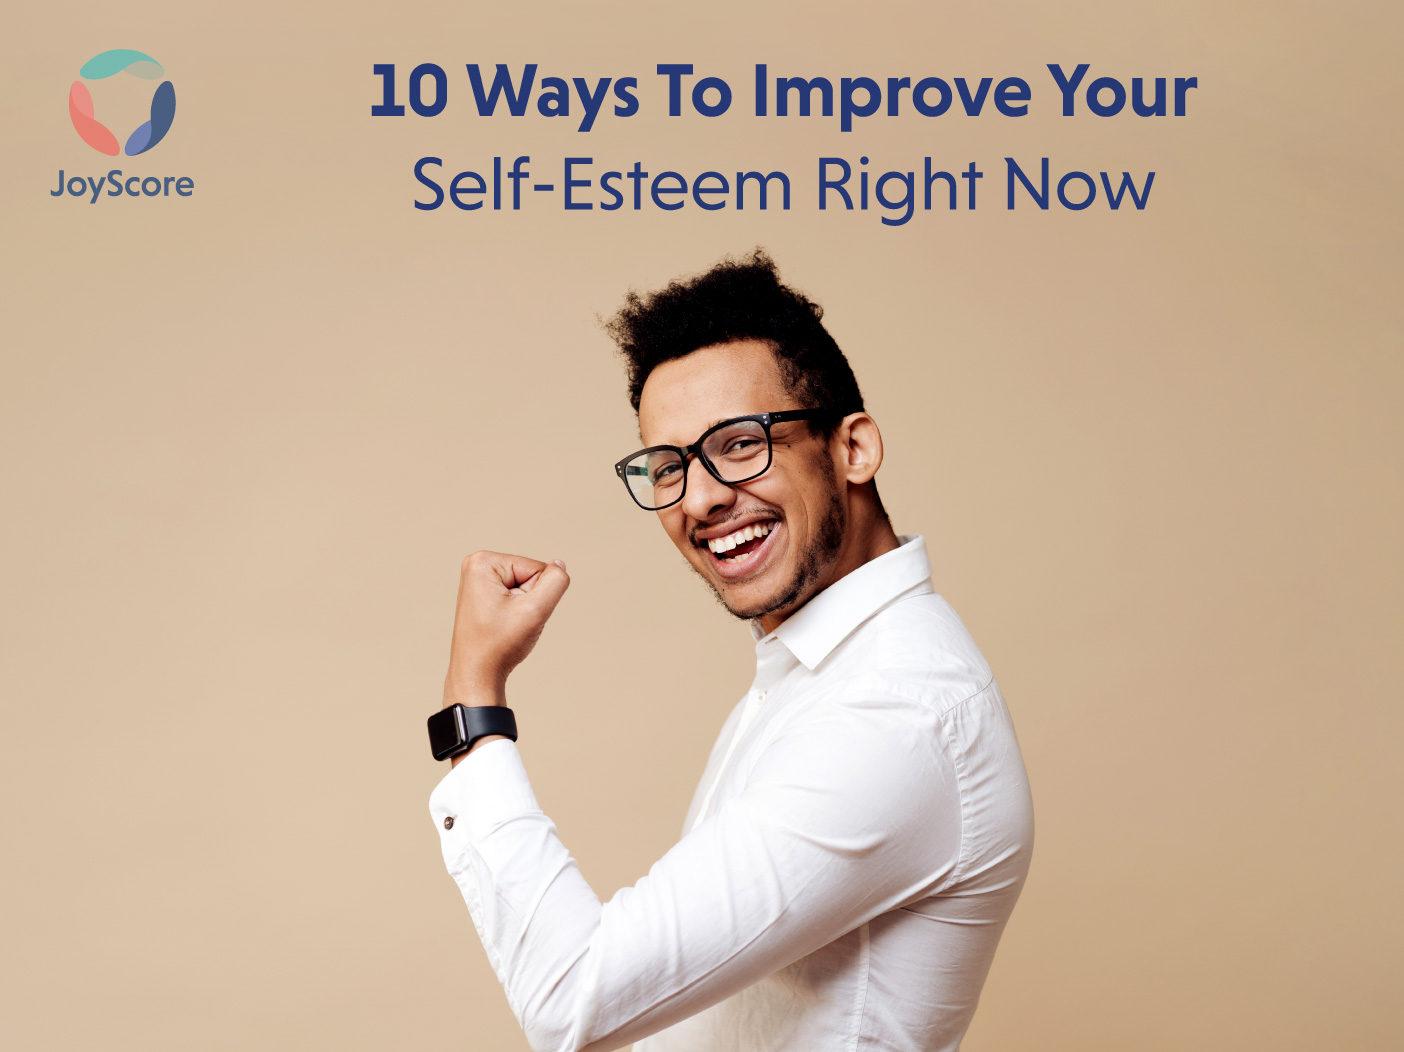 10 Healthy Ways To Improve Your Self-Esteem